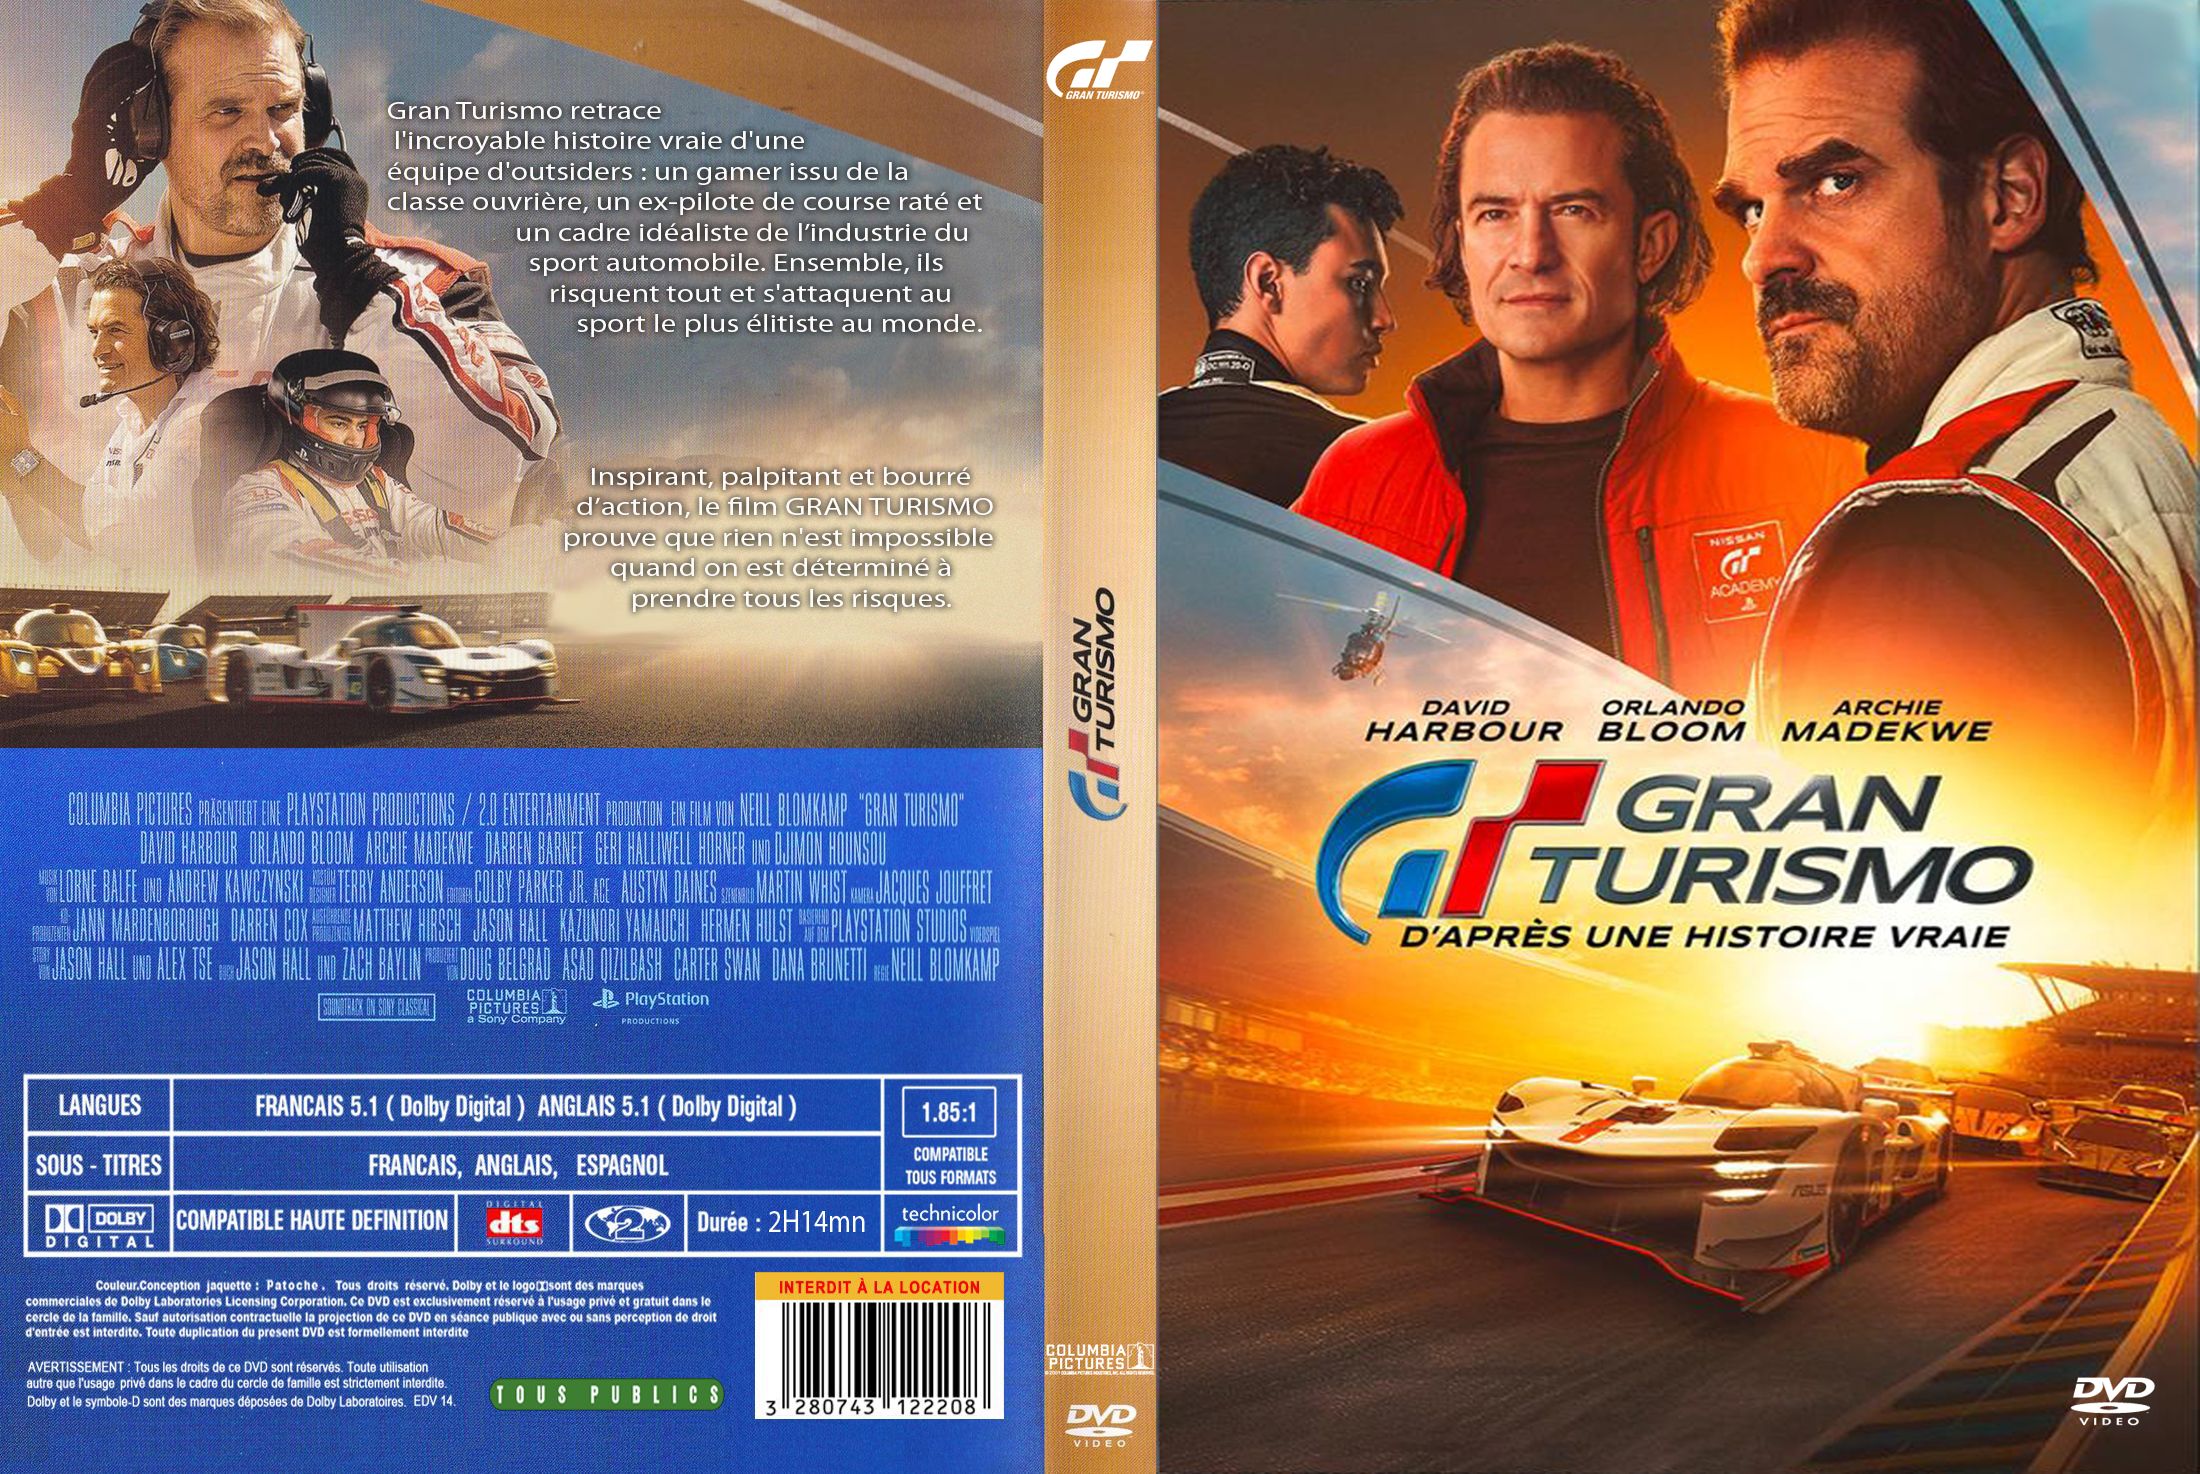 Jaquette DVD Gran Turismo custom v2